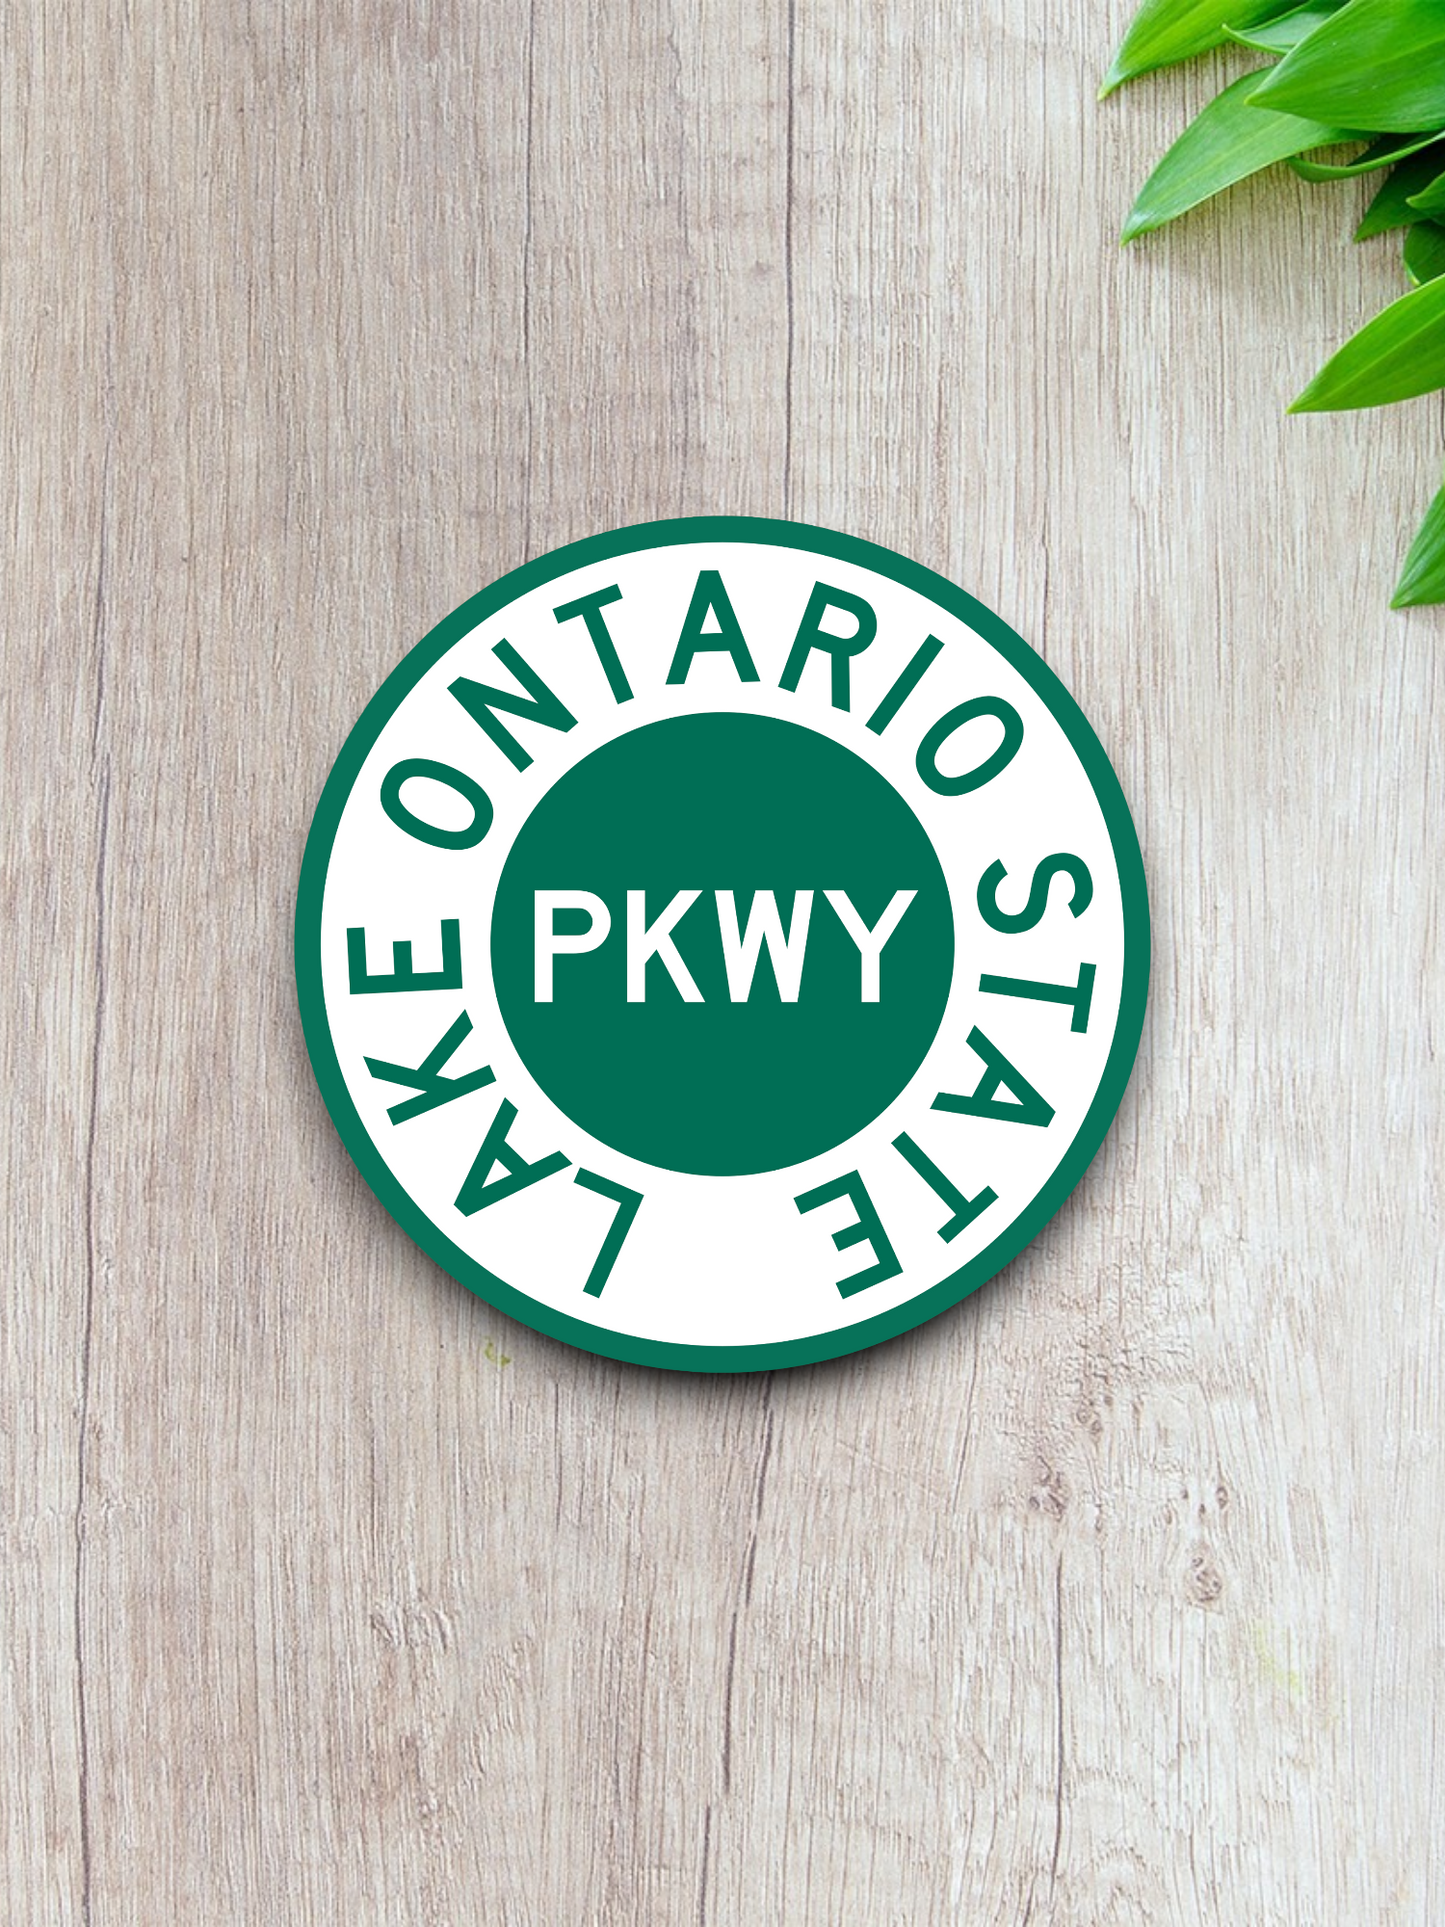 Lake Ontario State Parkway Shield Sticker